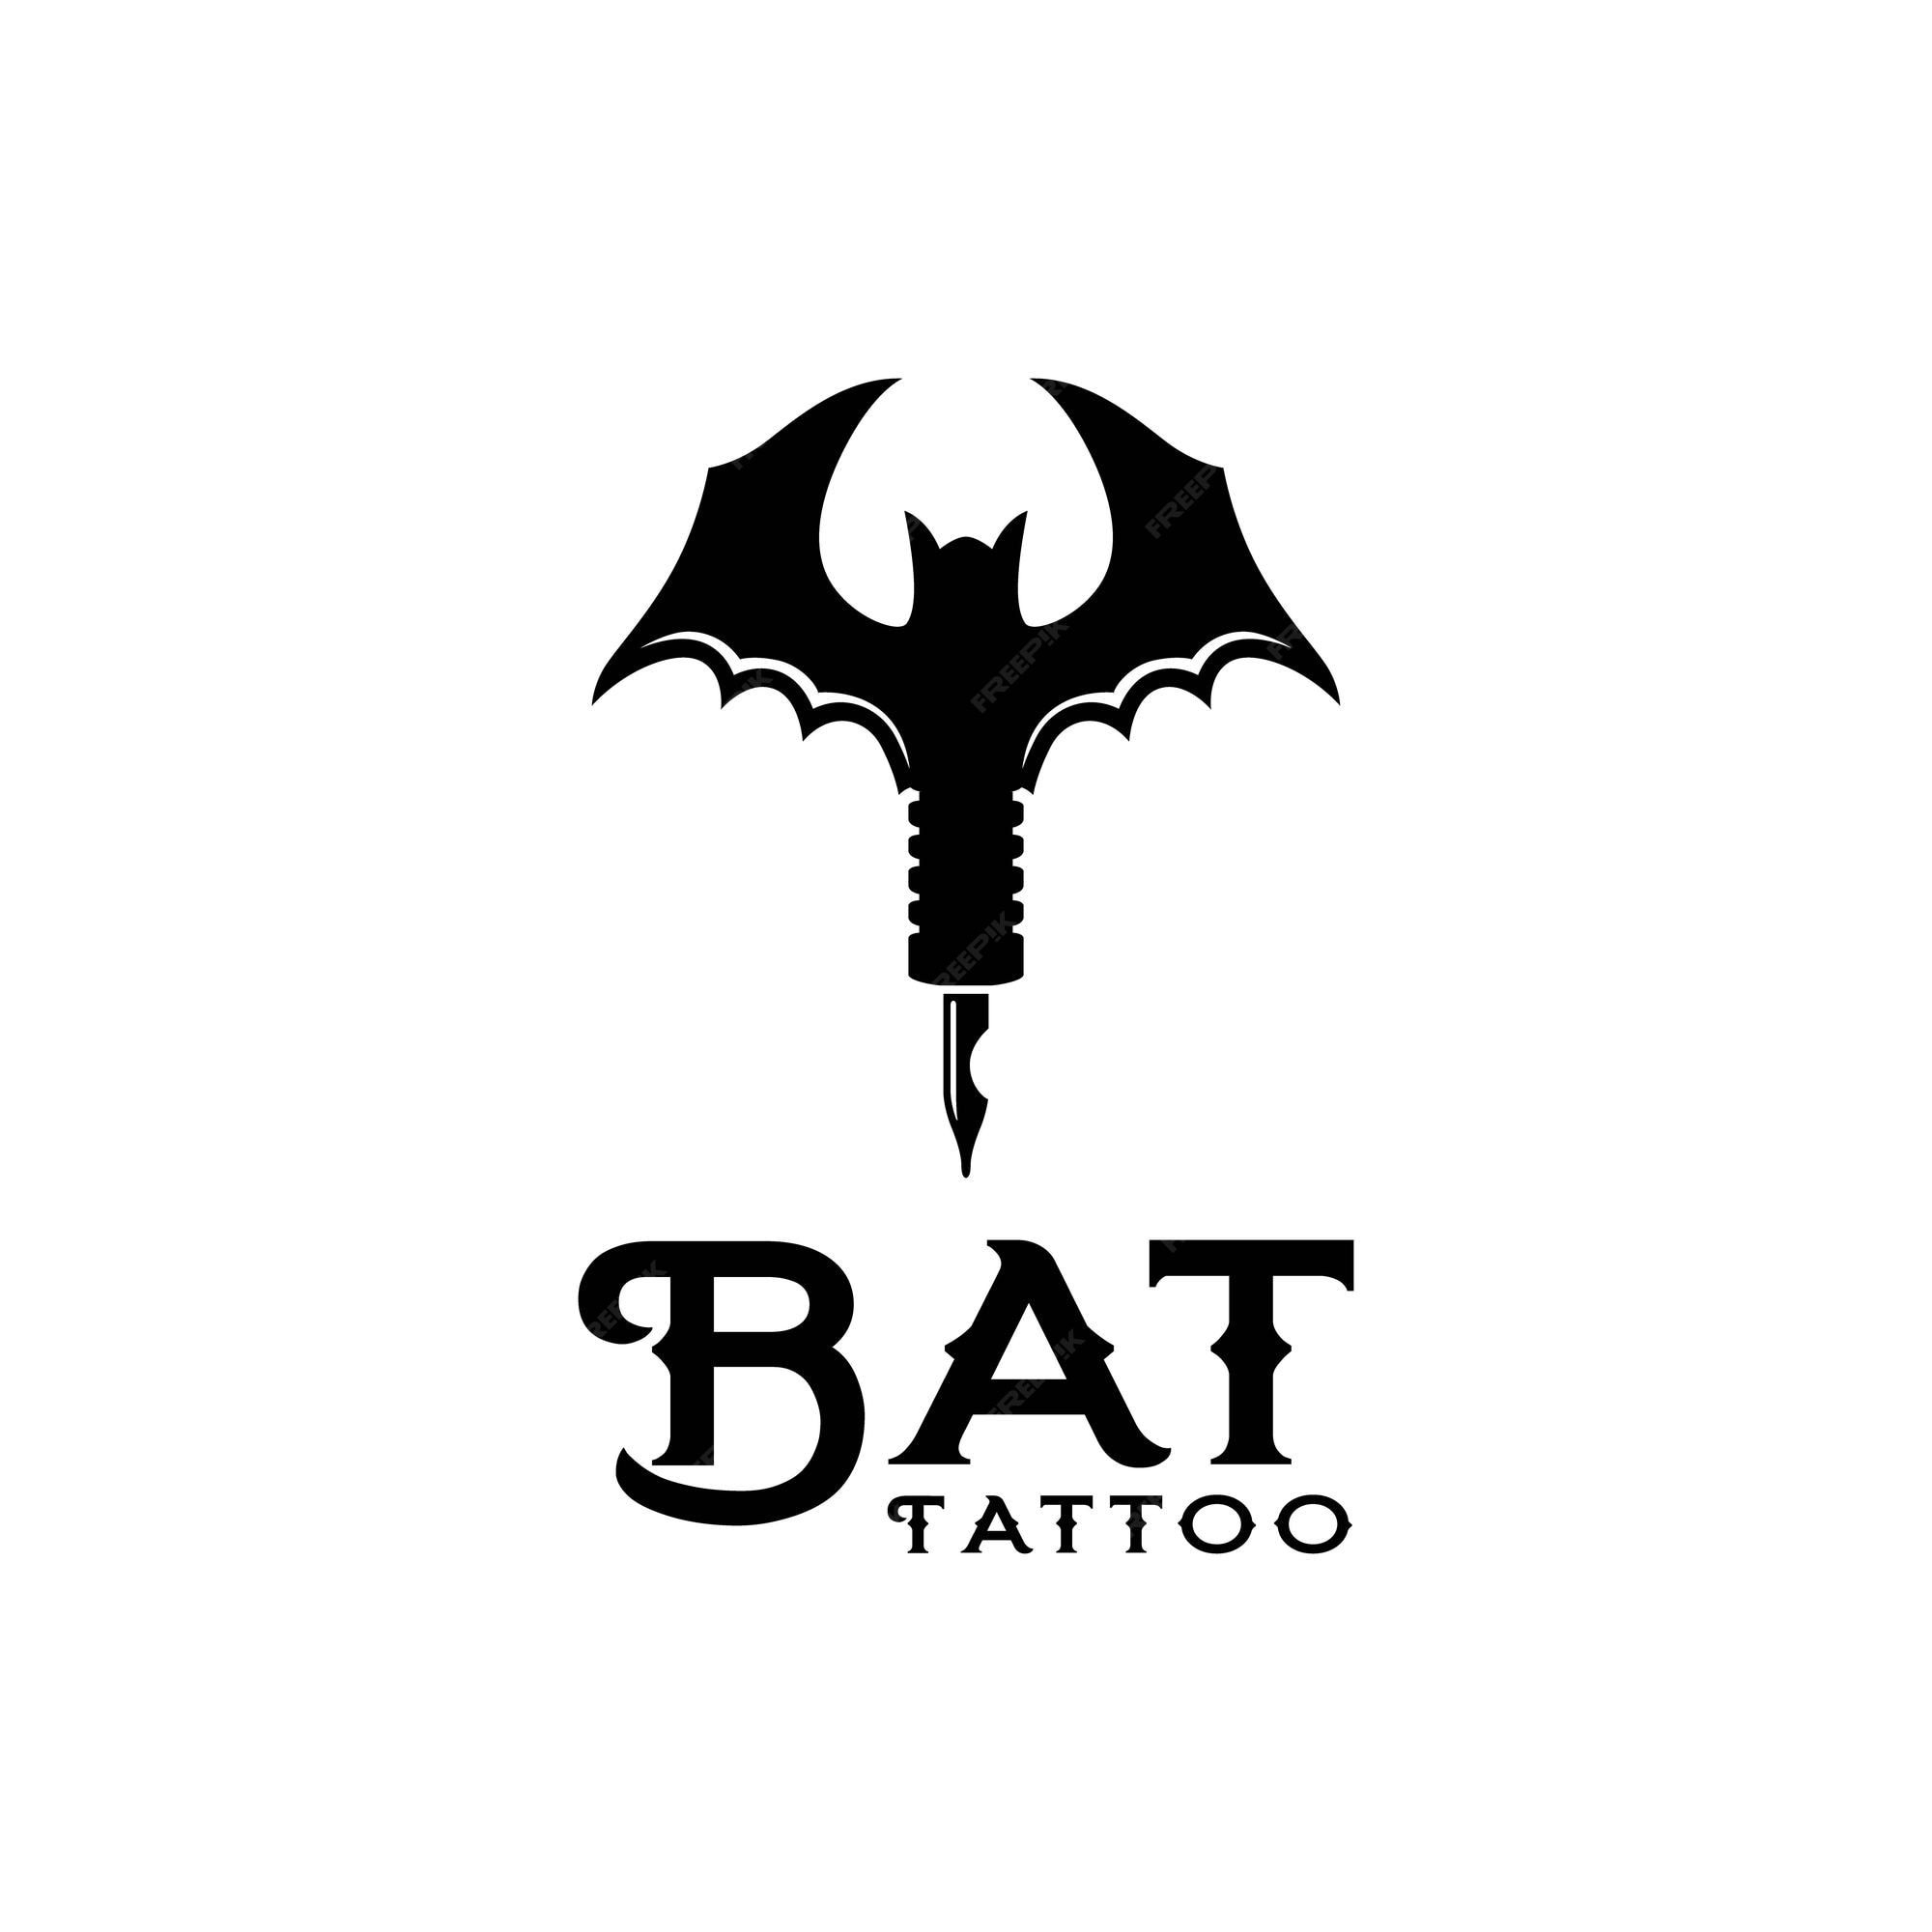 Premium Vector | Bat tattoo machine logo , tattoo artist logo with bat  symbol vector design